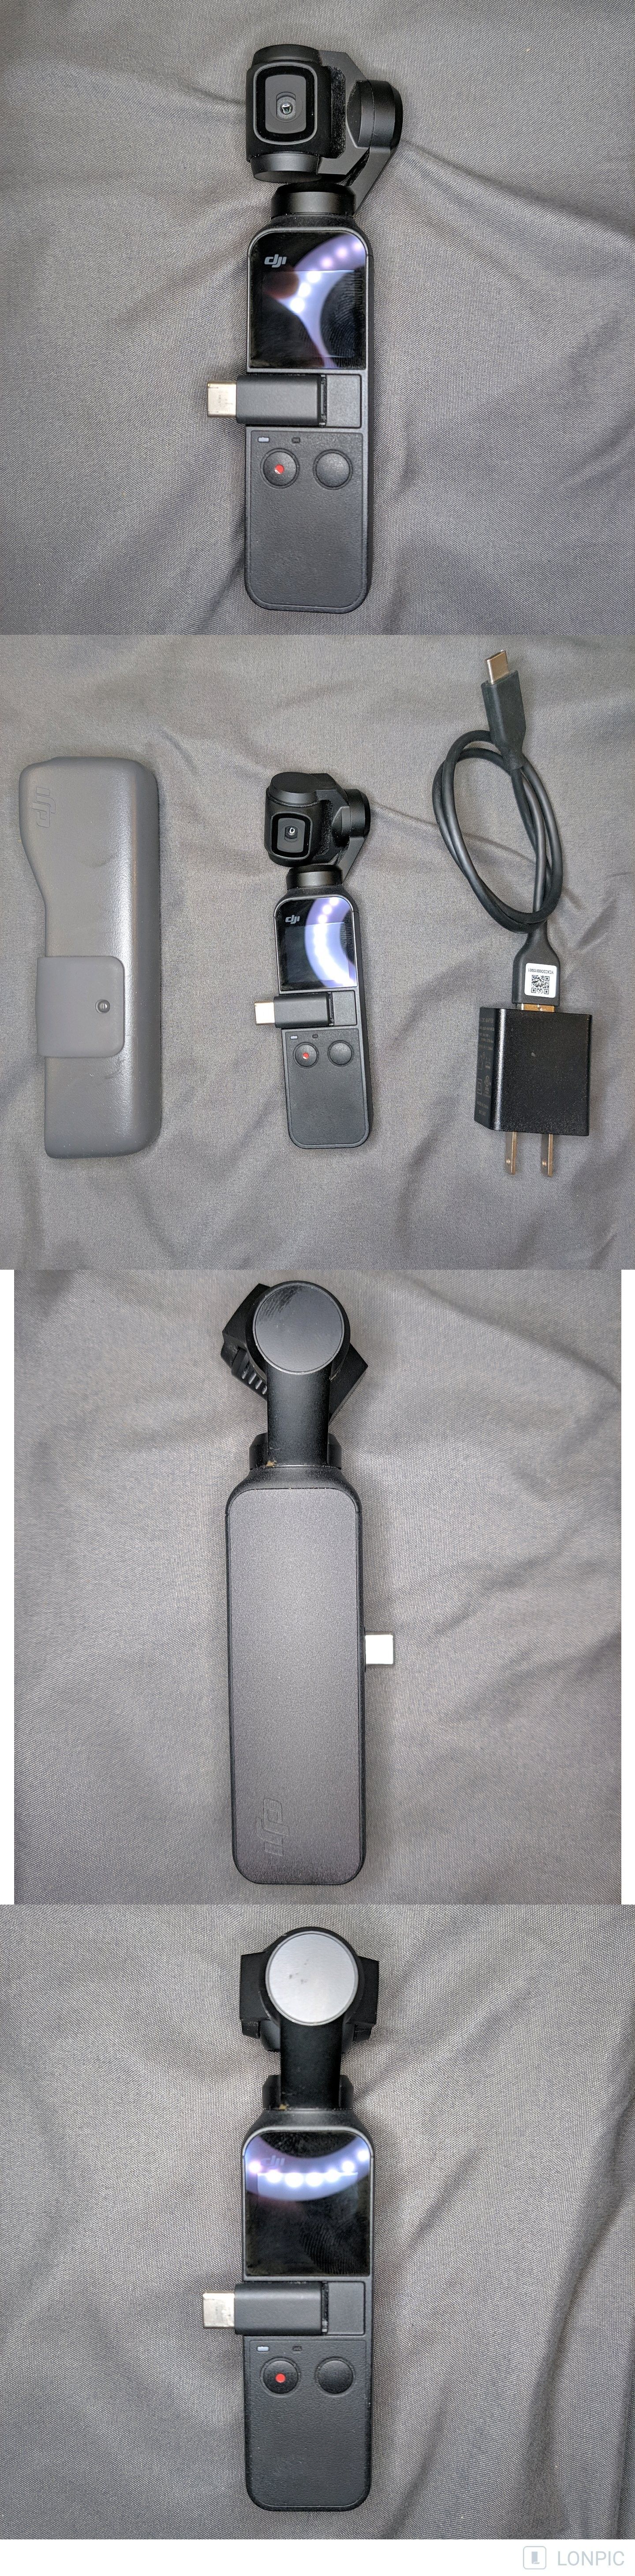 DJI Osmo Pocket camera